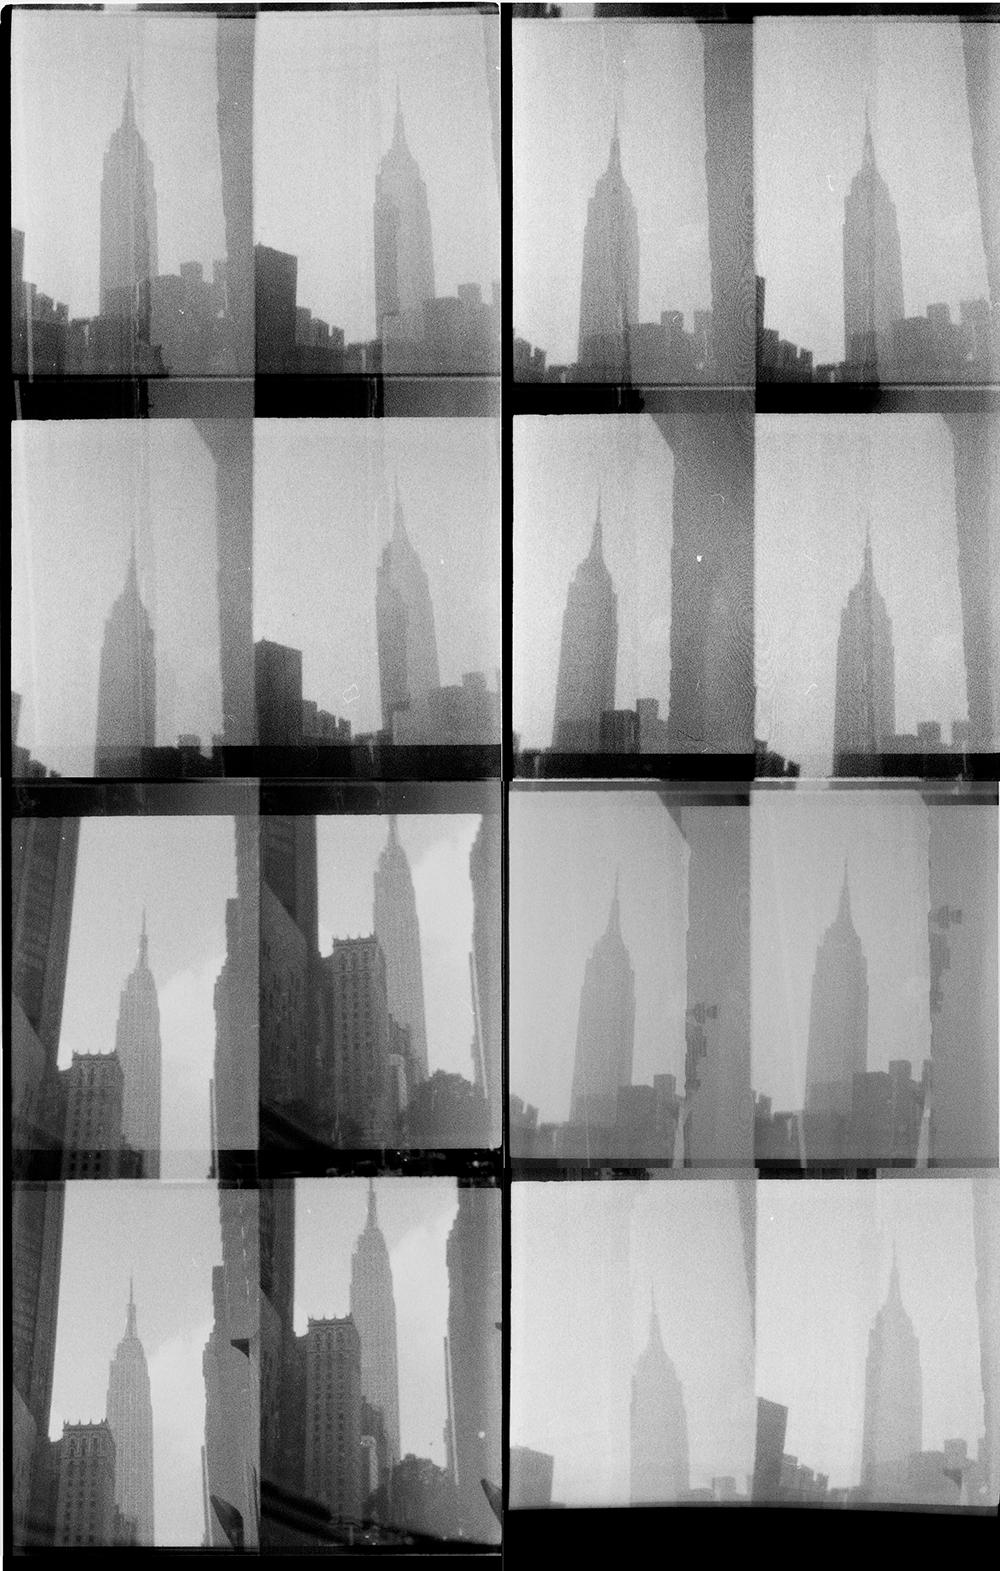 Stefanie Schneider Color Photograph - The Empire (Strange Love) - Empire State Building, New York, Landscape